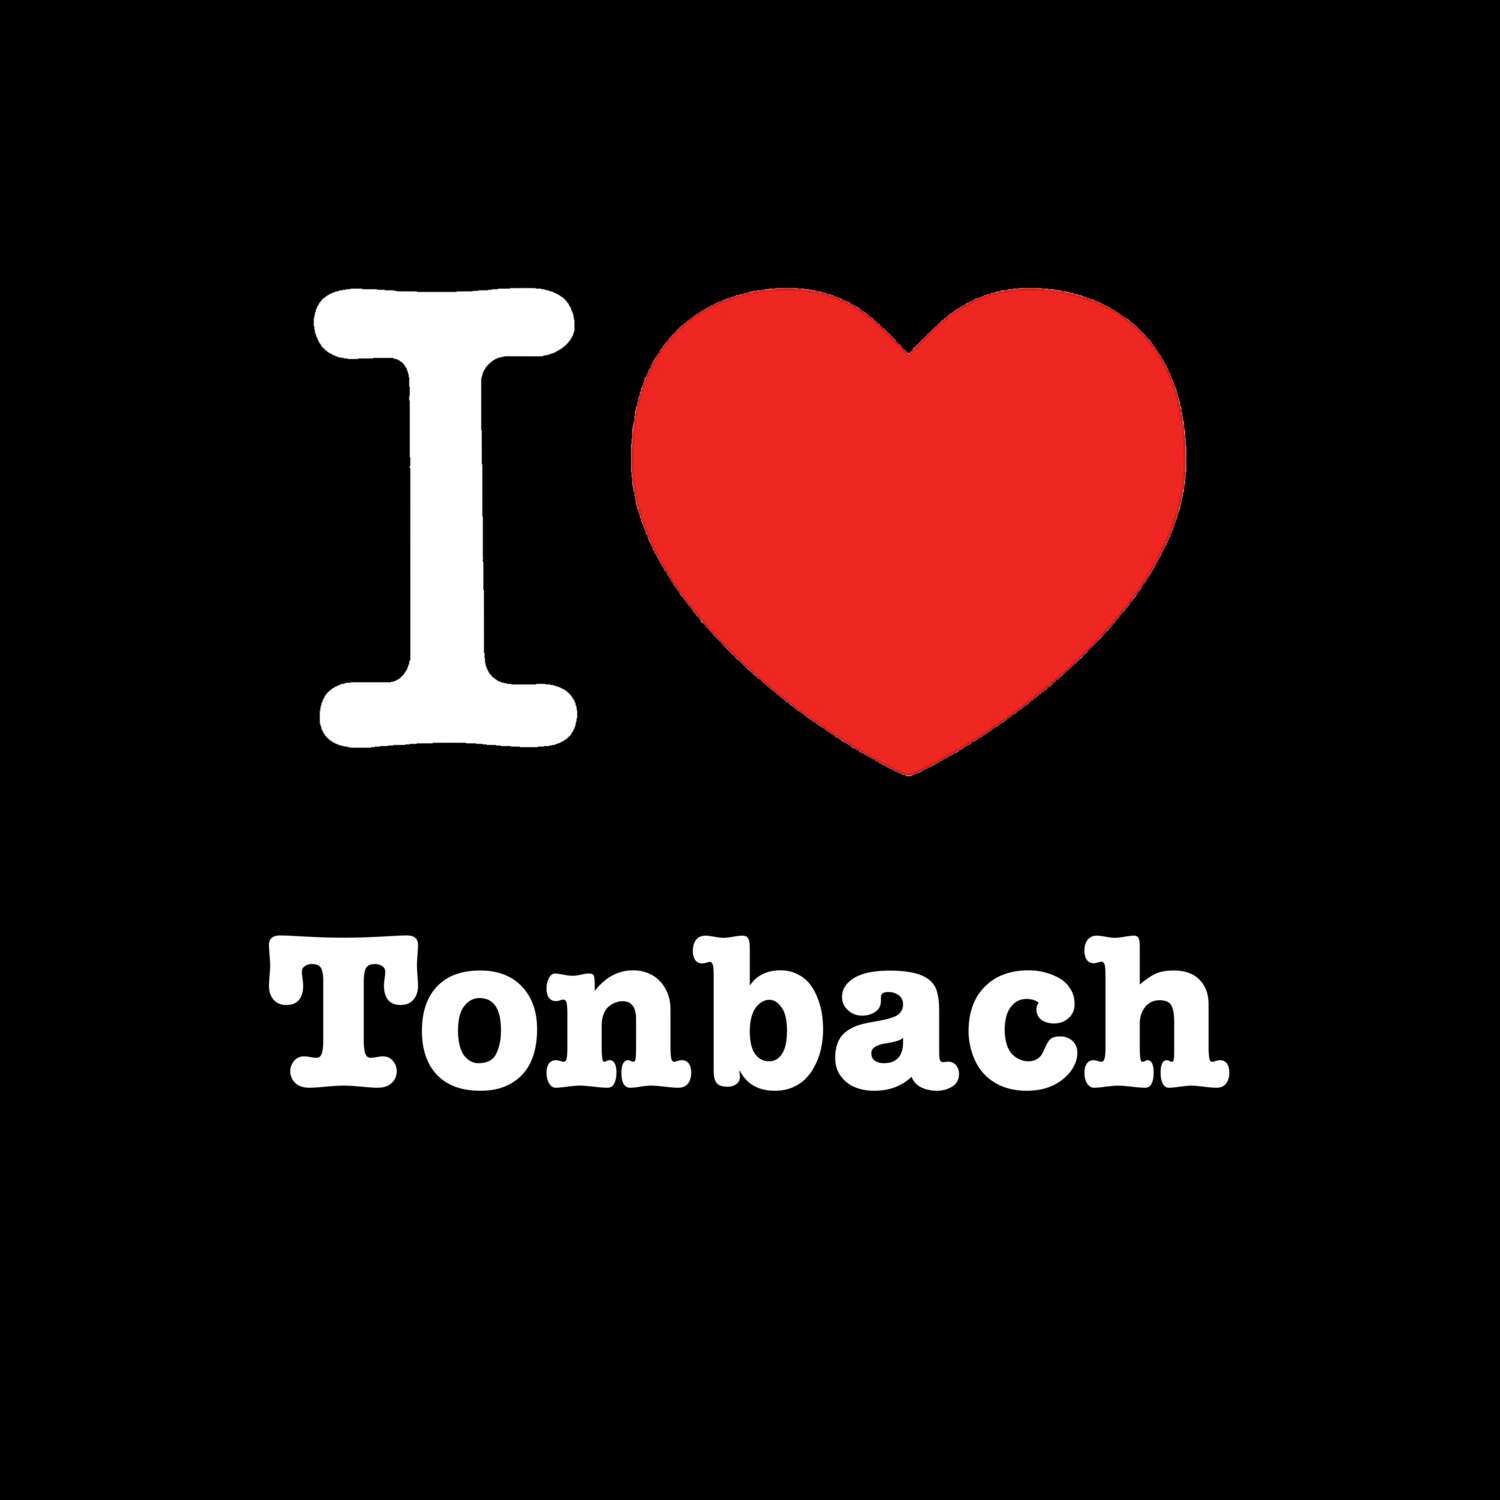 Tonbach T-Shirt »I love«